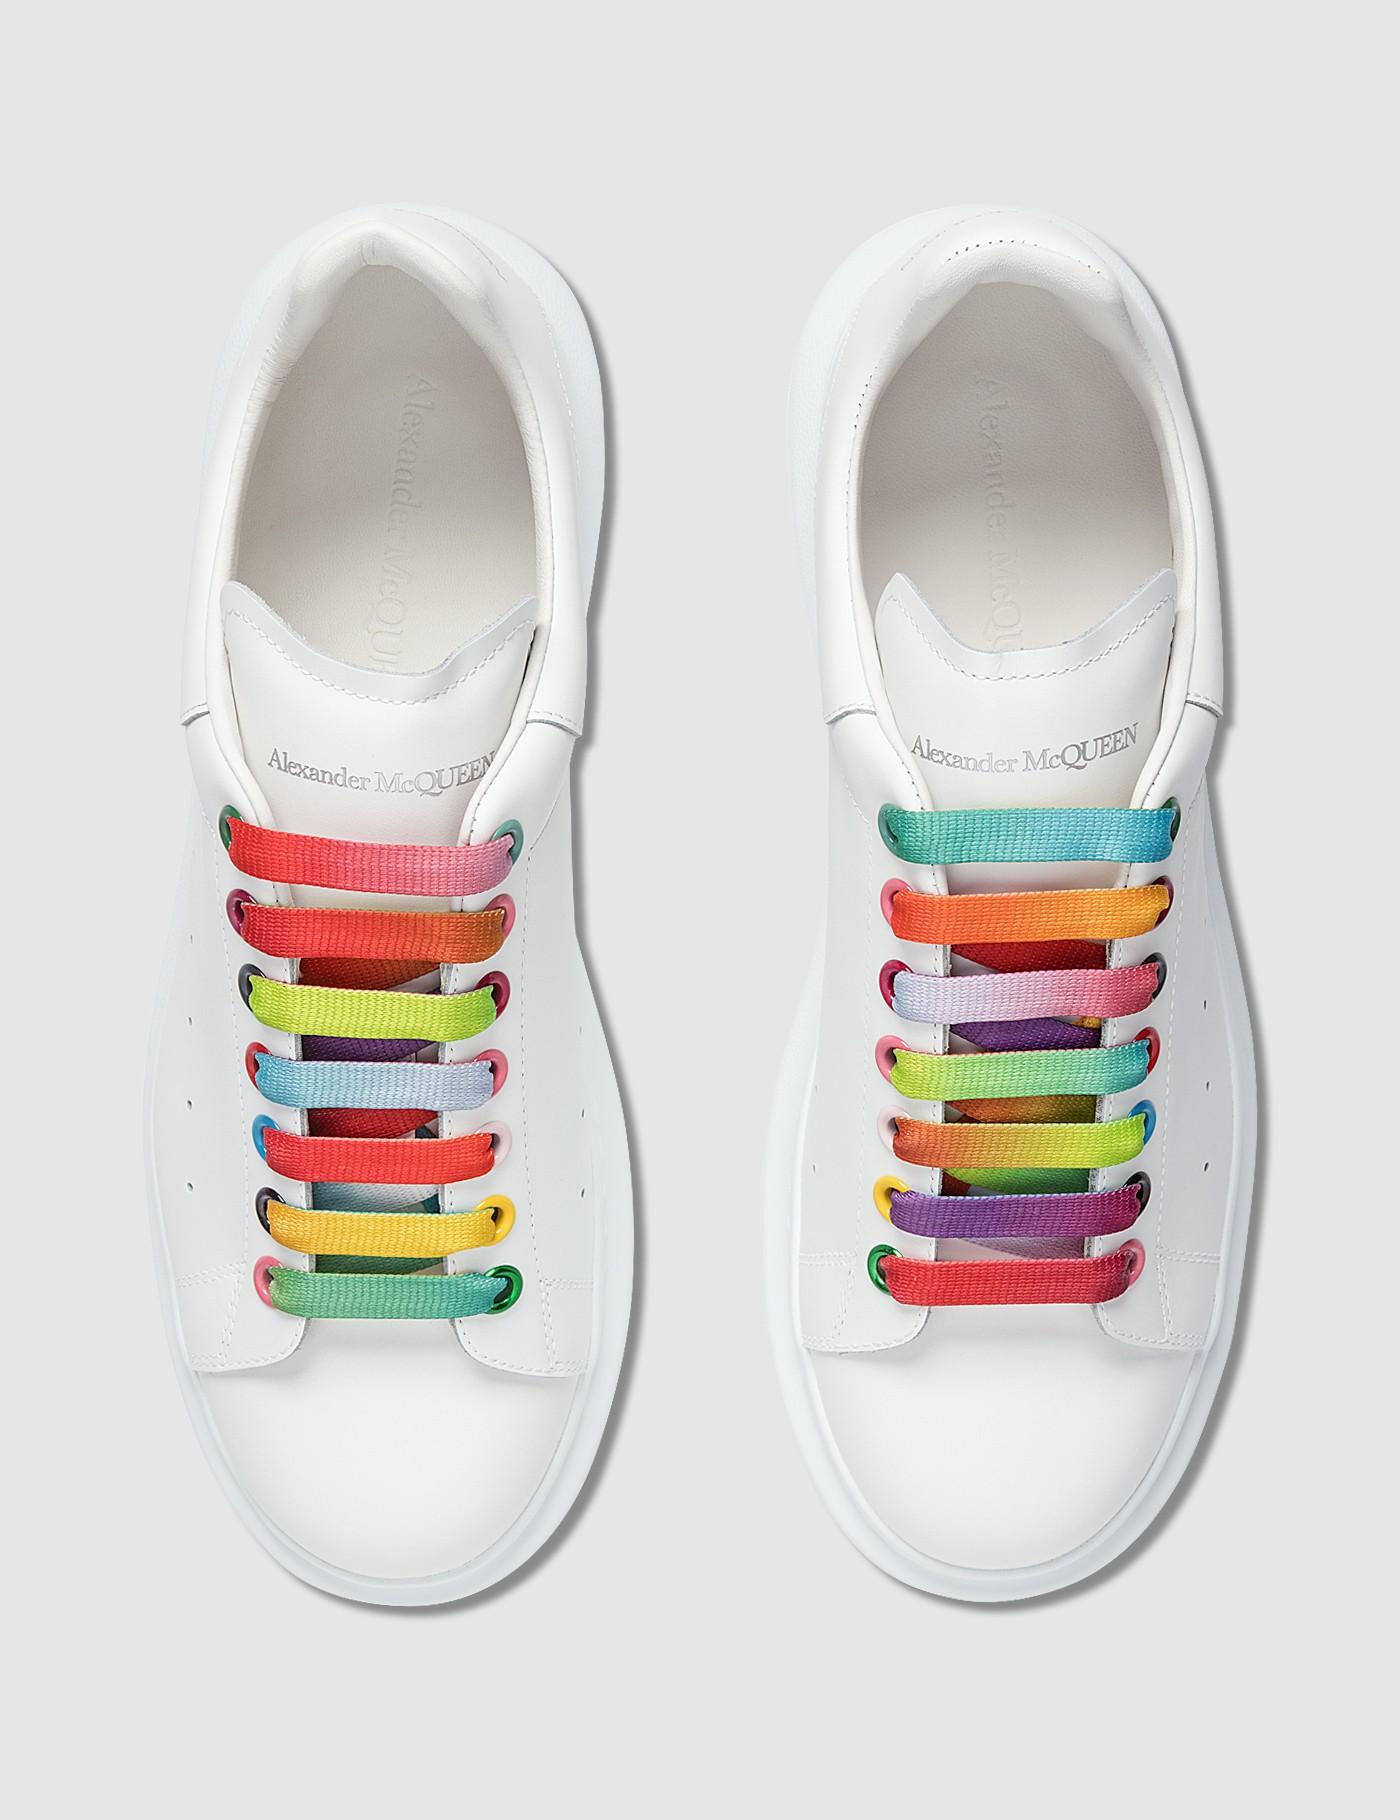 Alexander McQueen Rainbow Lace Oversized Sneaker in White for Men - Lyst